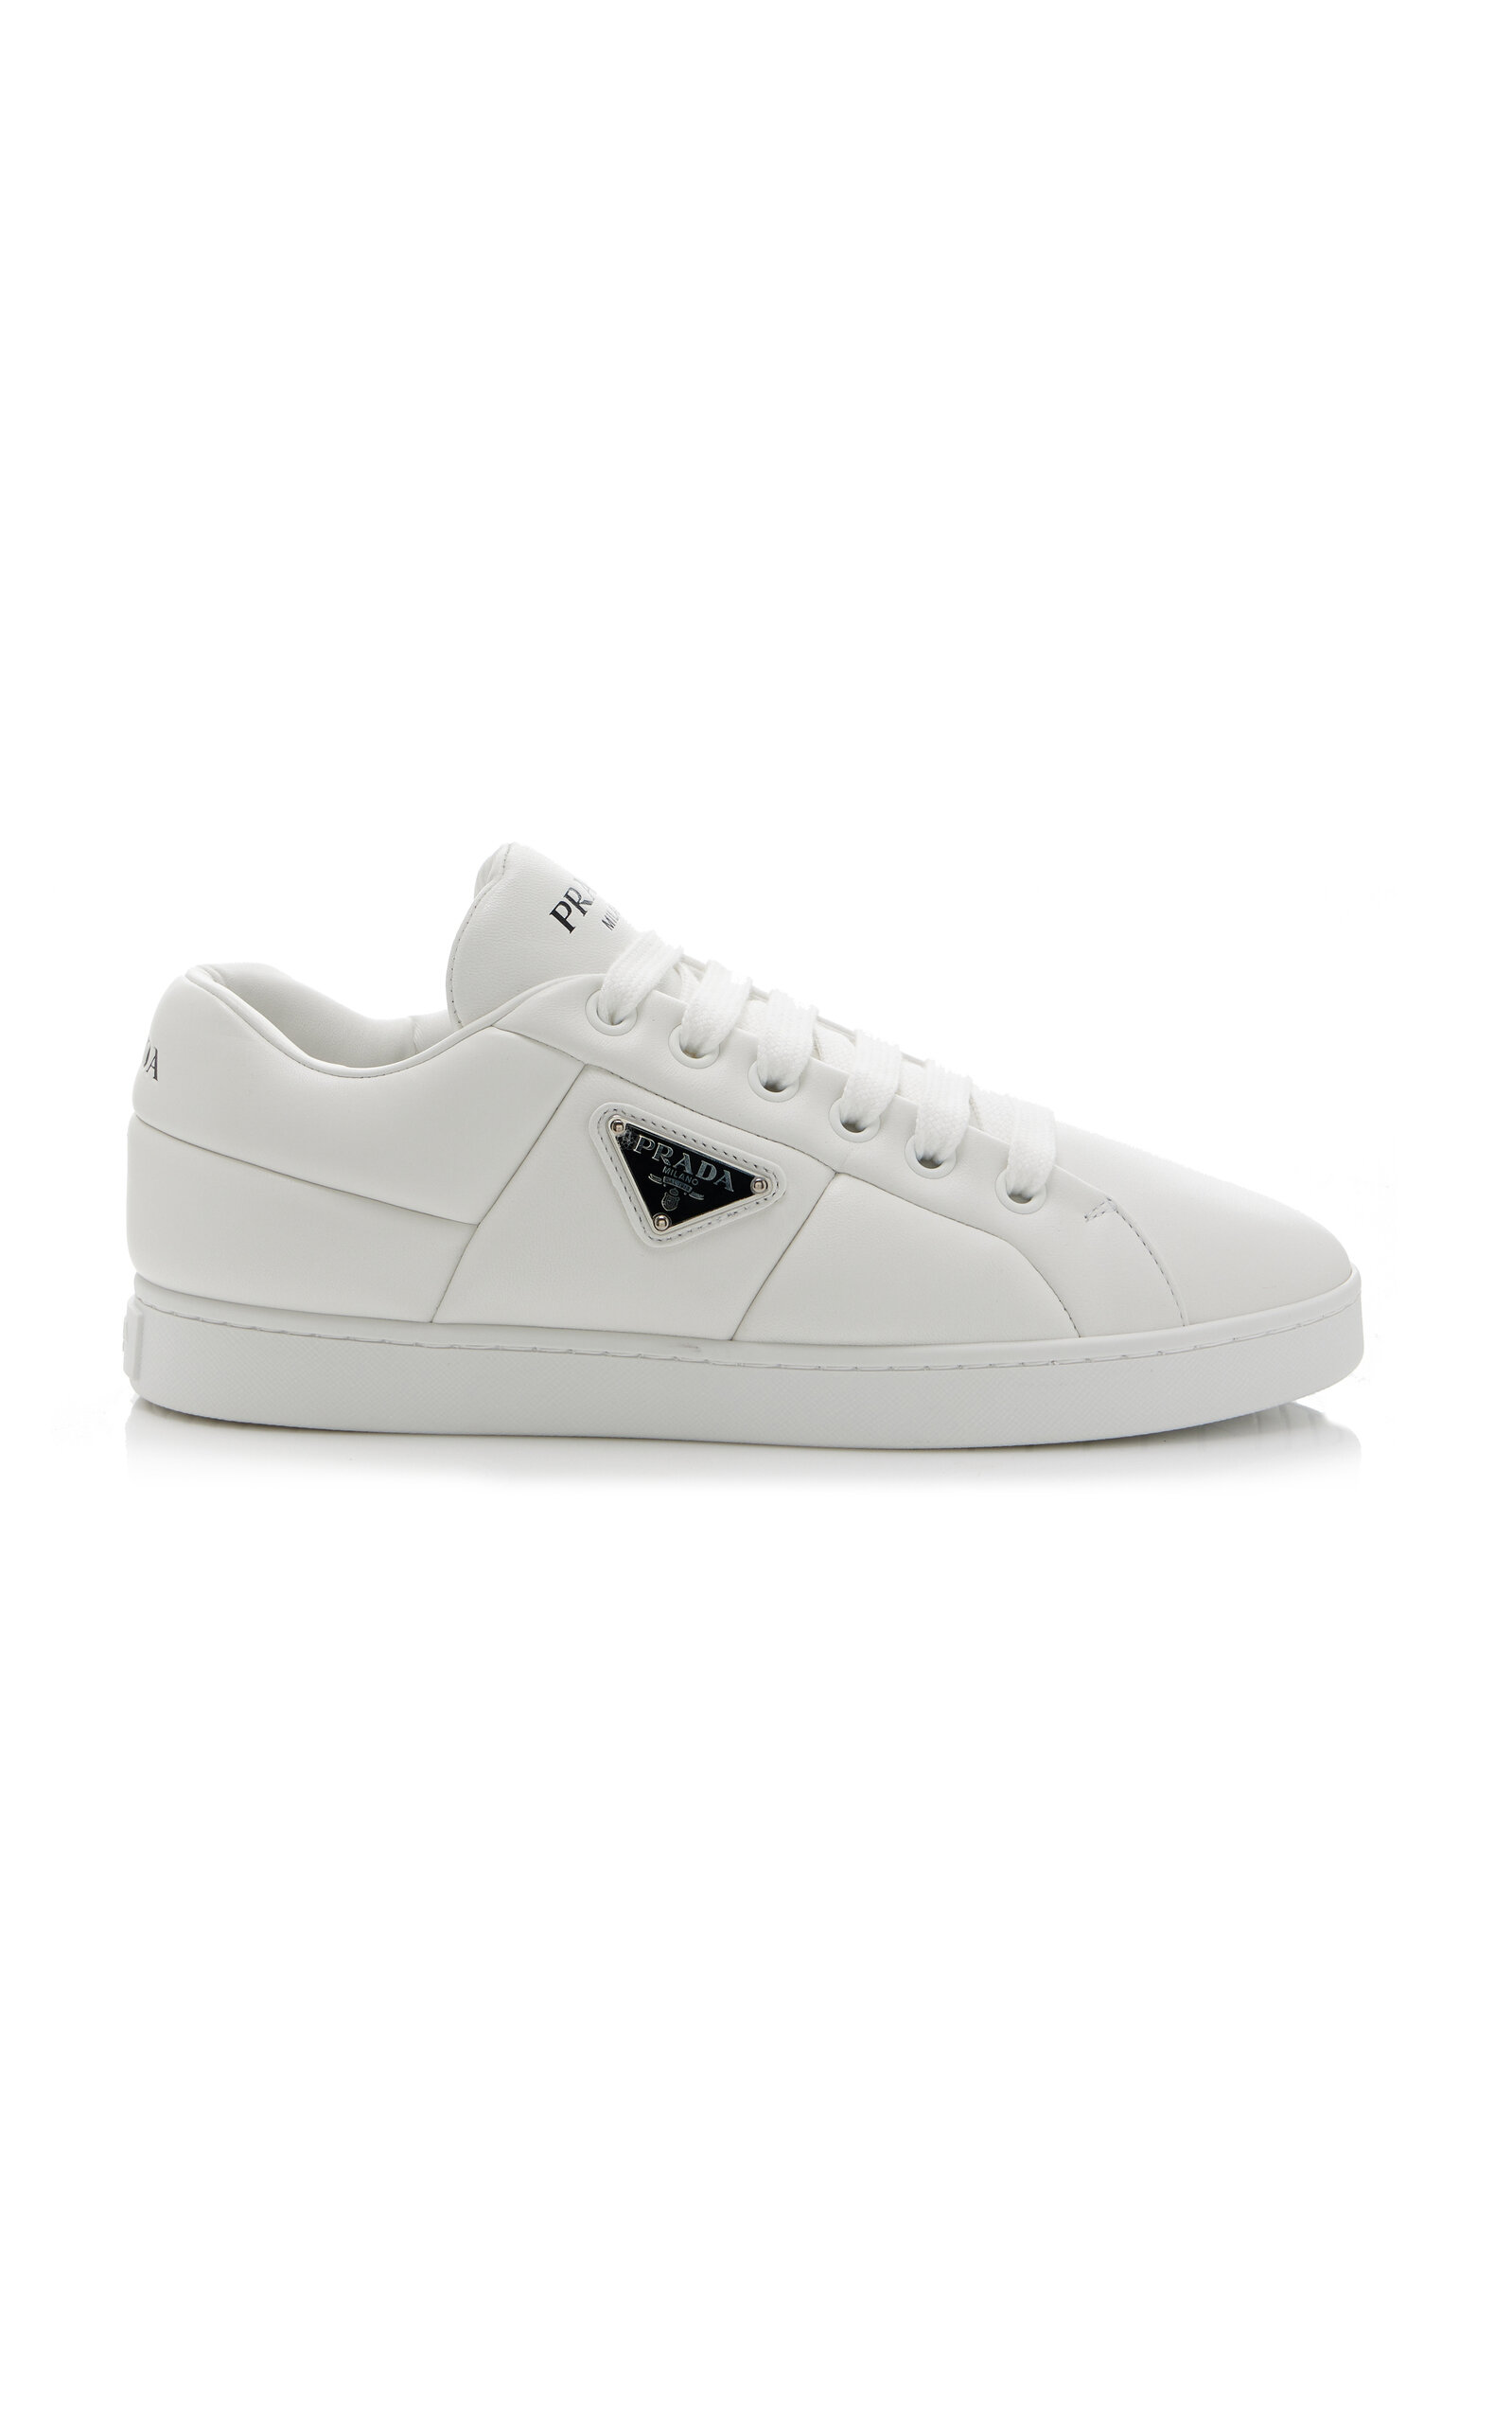 Prada - Lane Low Top Sneakers                 - White - IT 38.5 - Moda Operandi